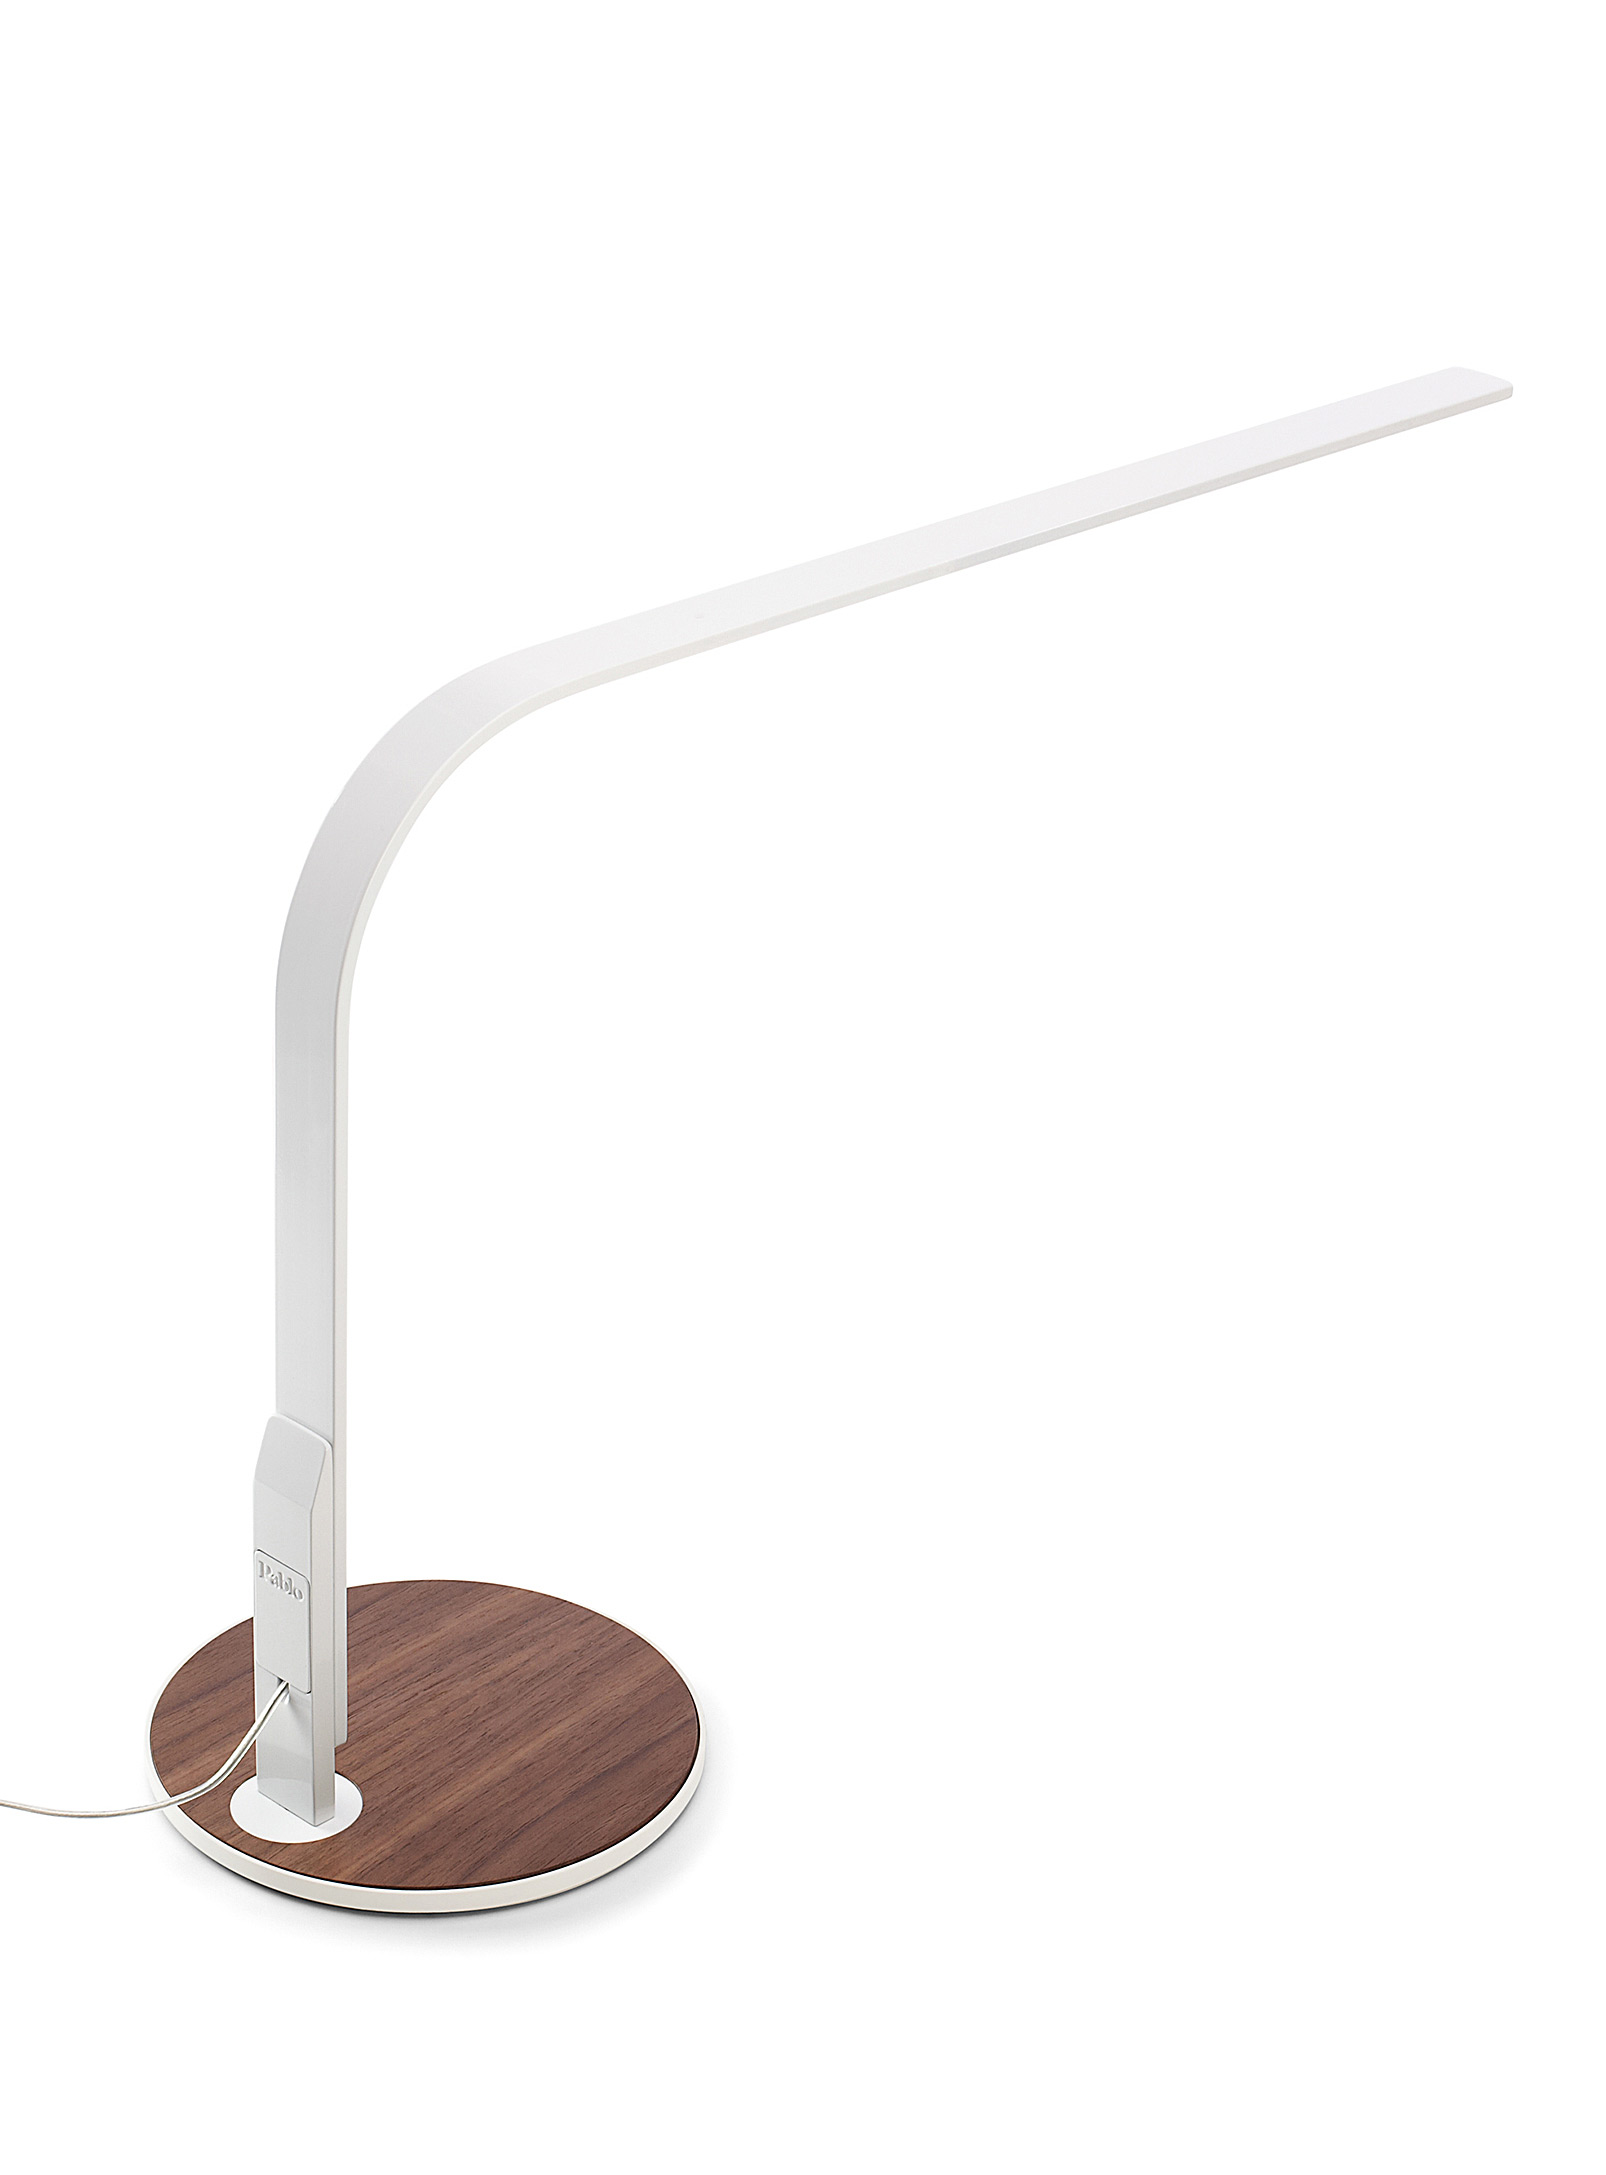 Pablo Designs - LIM360 table lamp